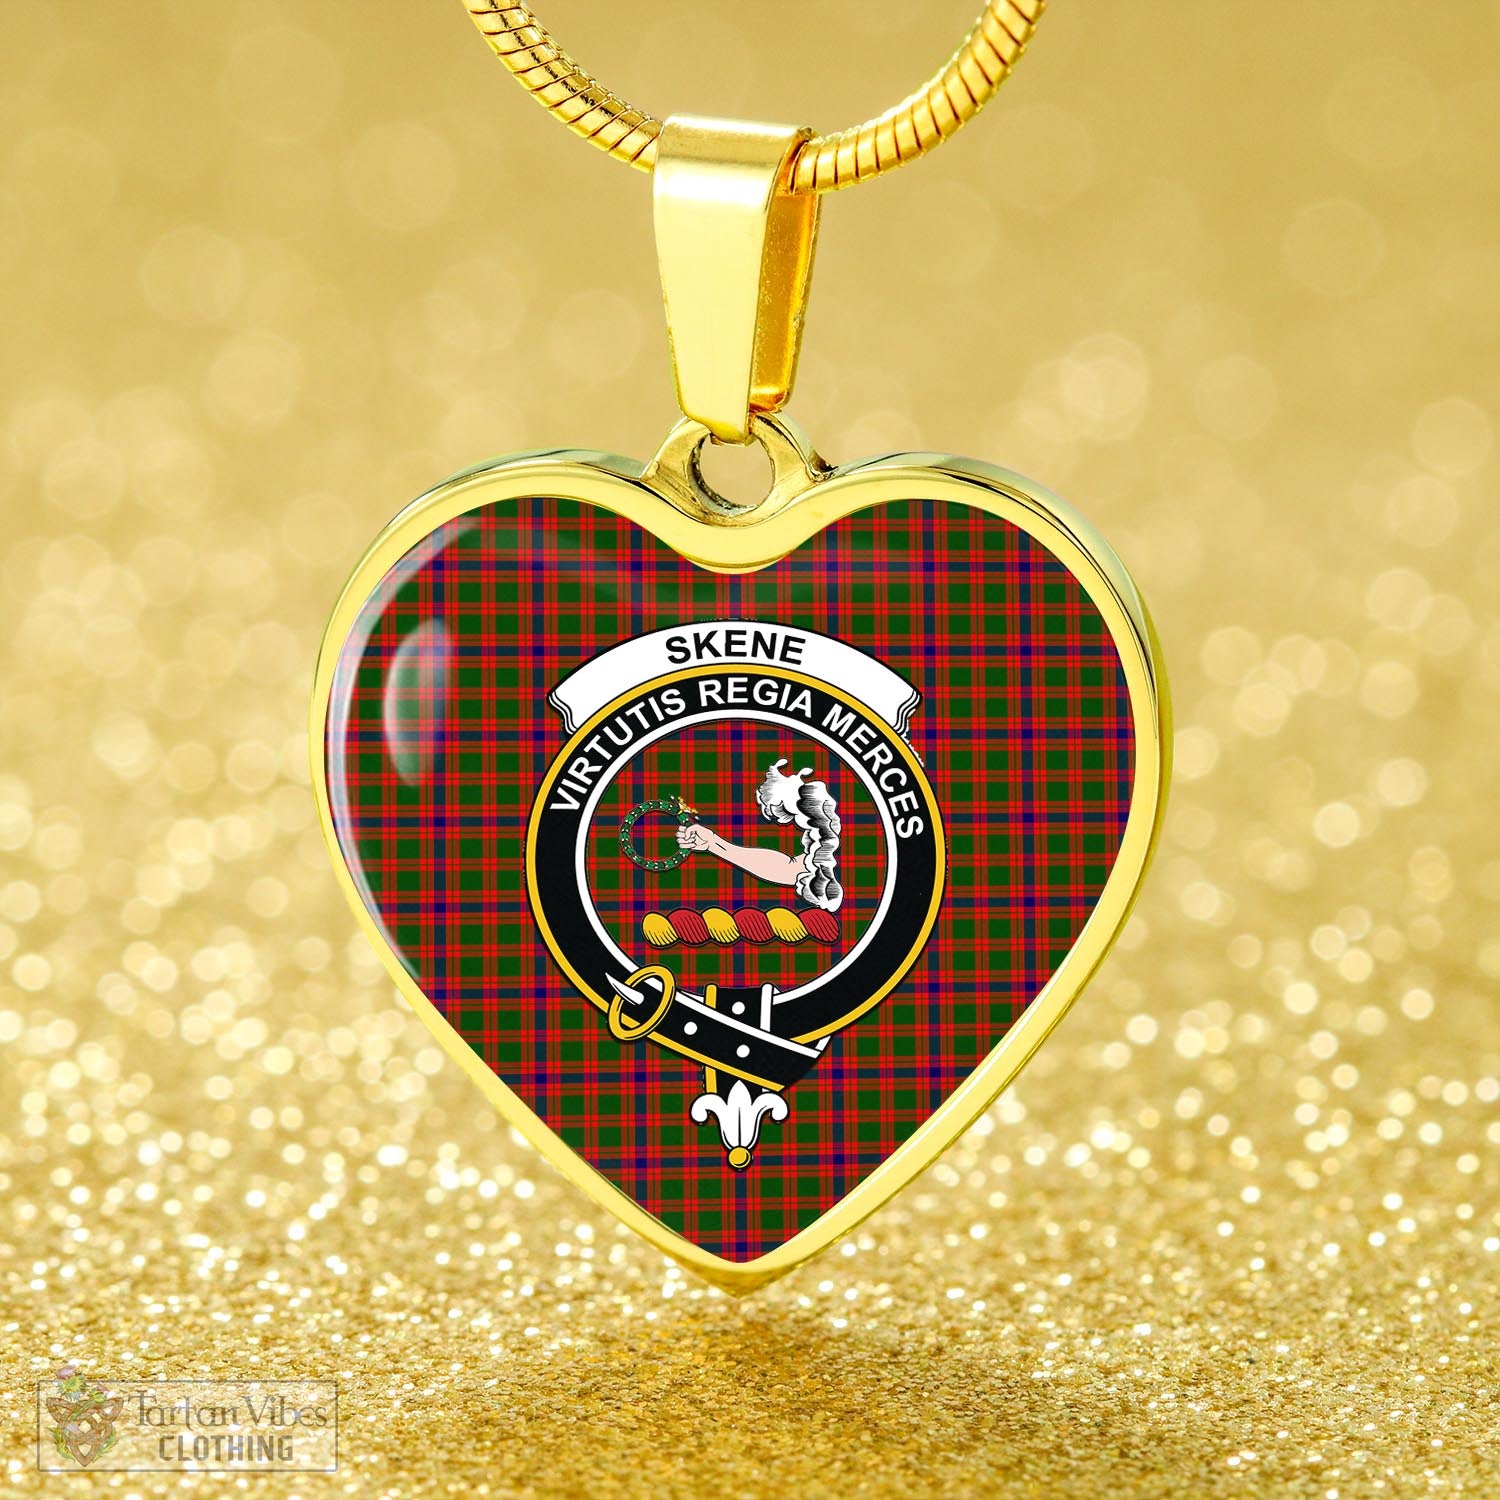 Tartan Vibes Clothing Skene Modern Tartan Heart Necklace with Family Crest